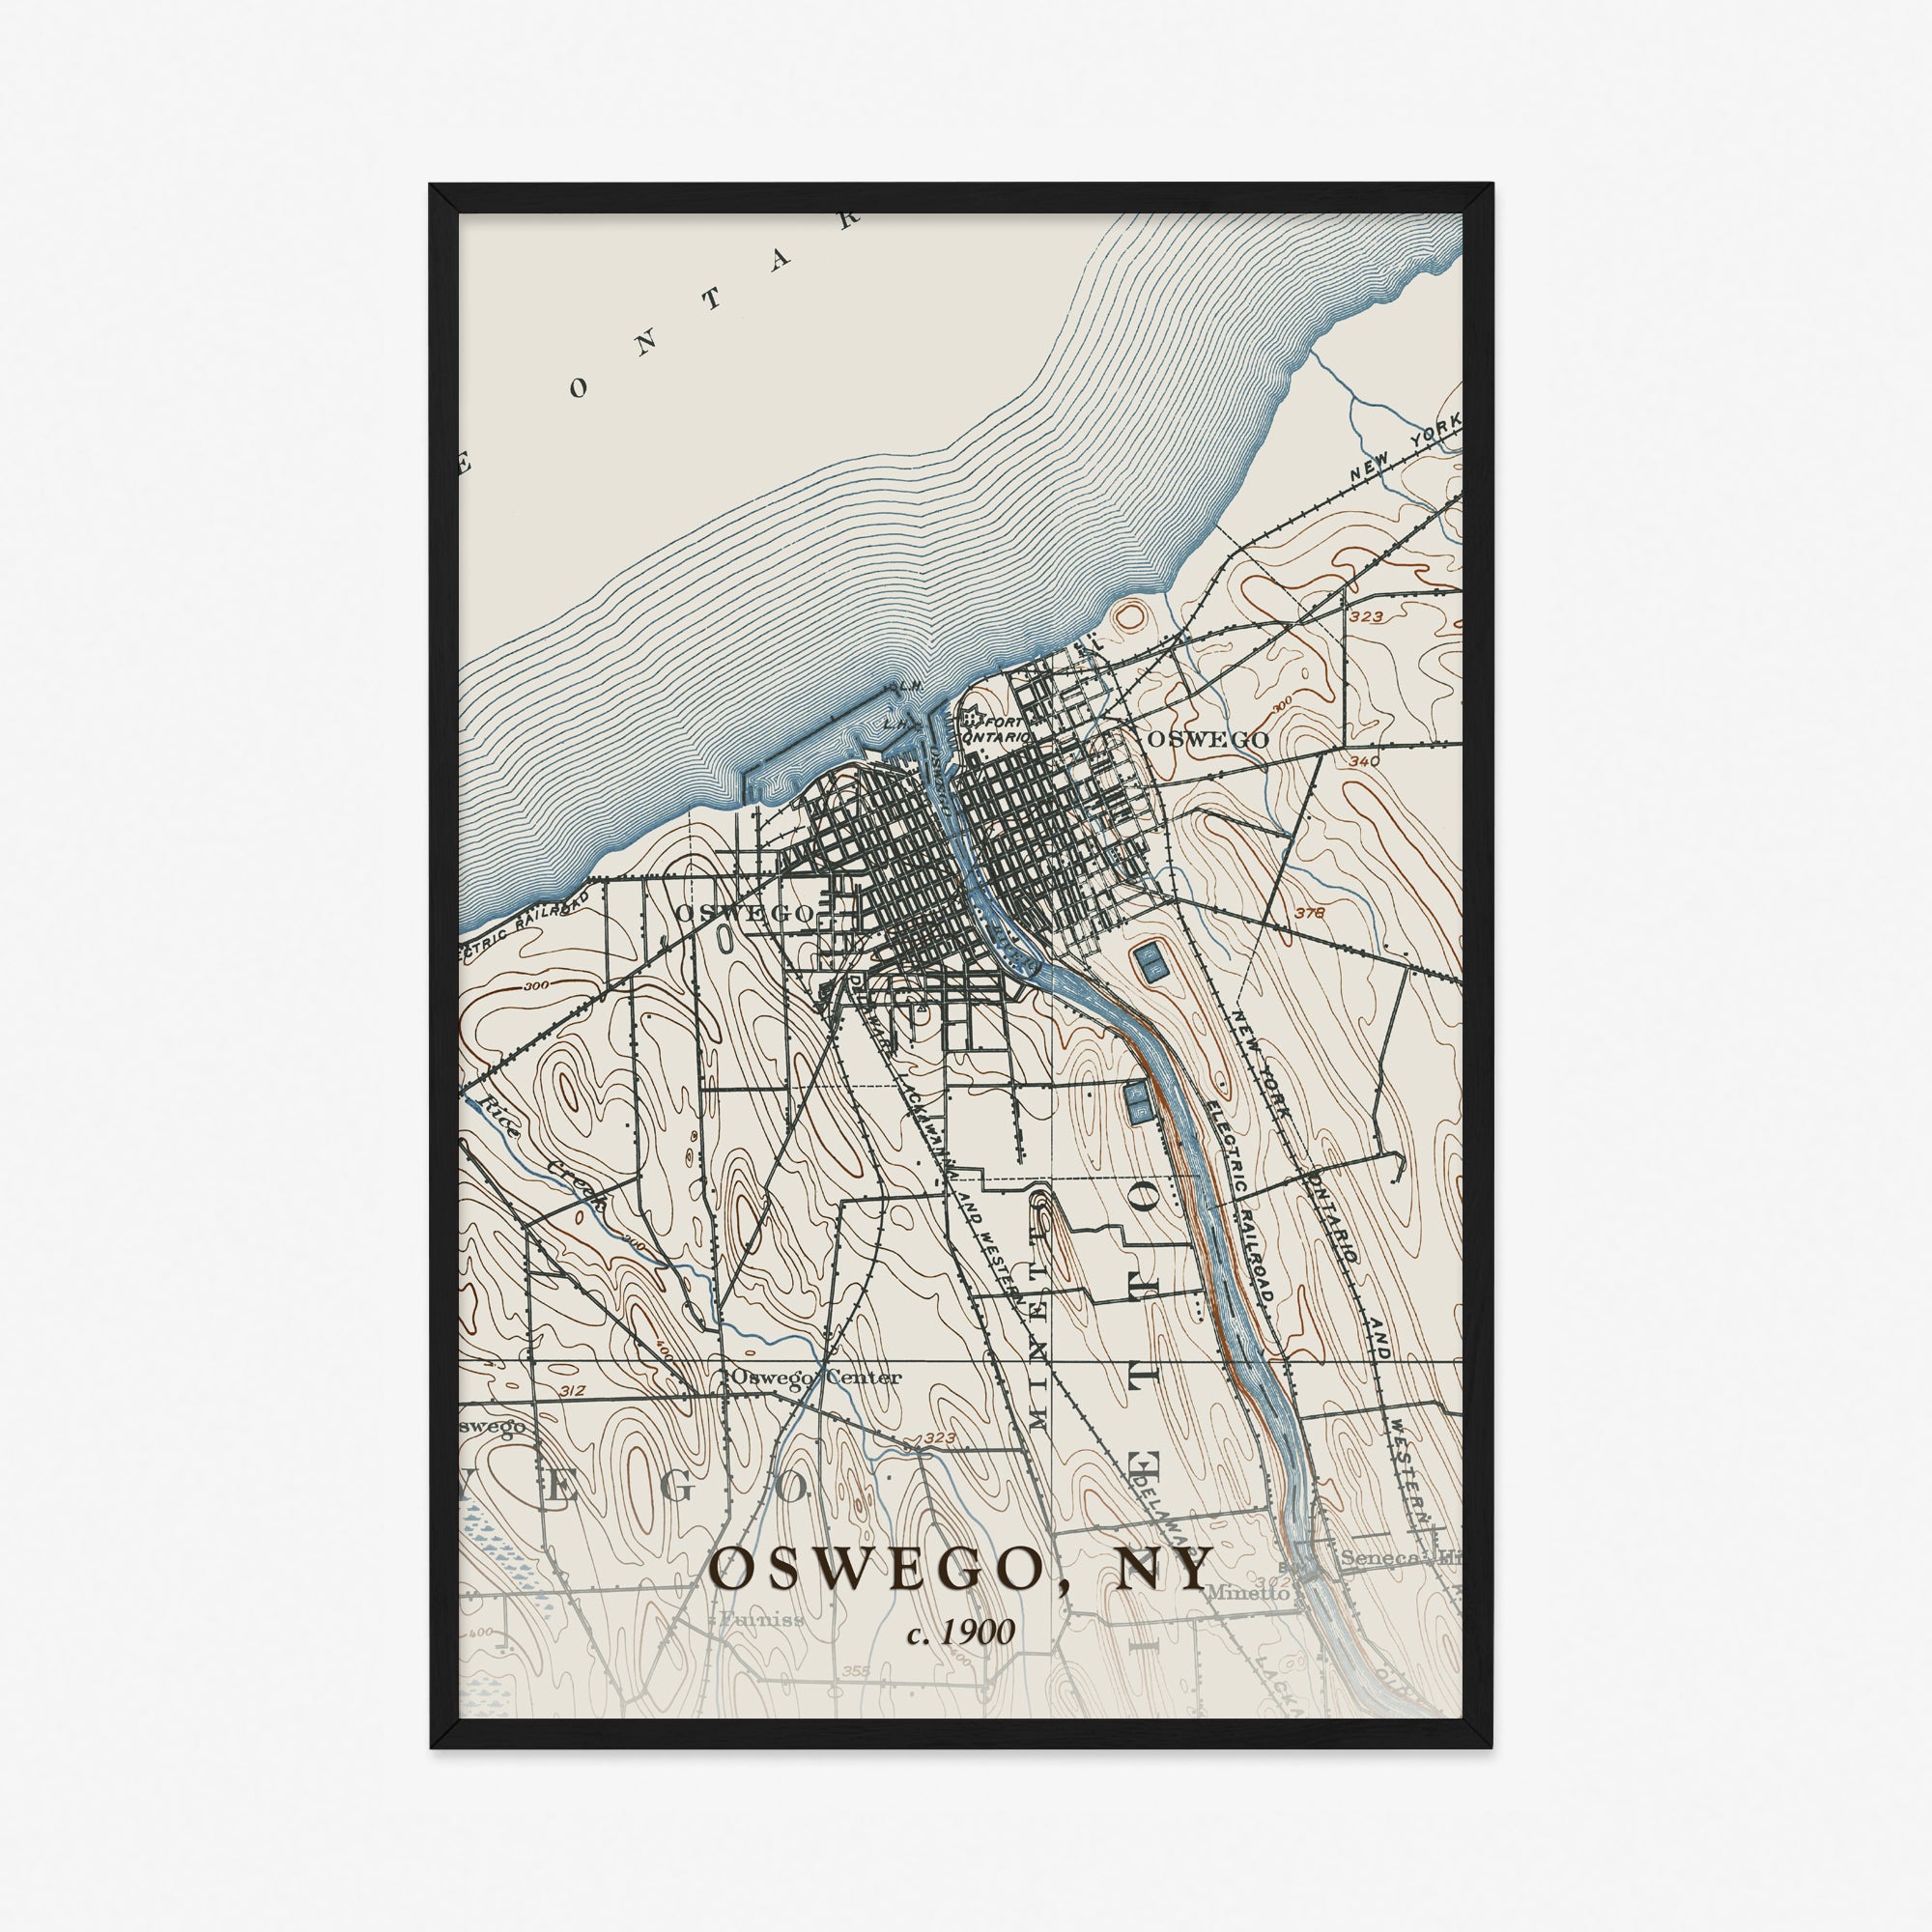 Oswego, NY - 1900 Topographic Map